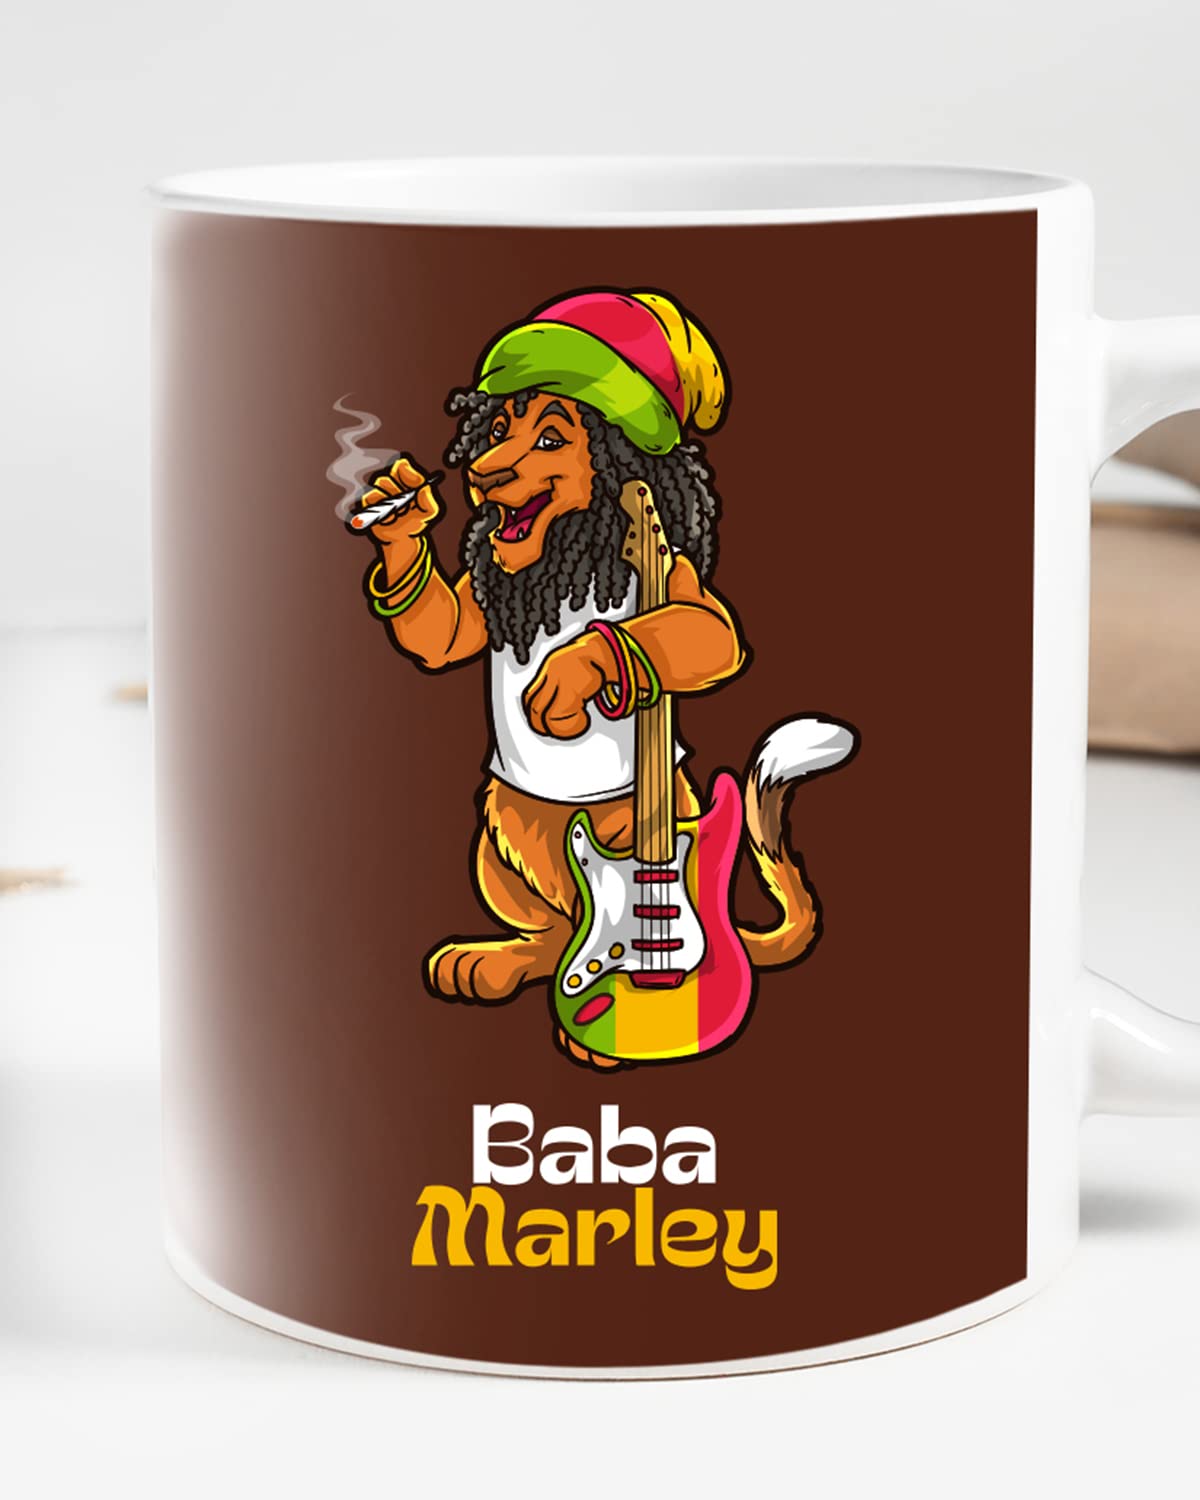 Baba Marley Coffee Mug - Gift for Friend, Birthday Gift, Birthday Mug, Motivational Quotes Mug, Mugs with Funny & Funky Dialogues, Bollywood Mugs, Funny Mugs for Him & Her